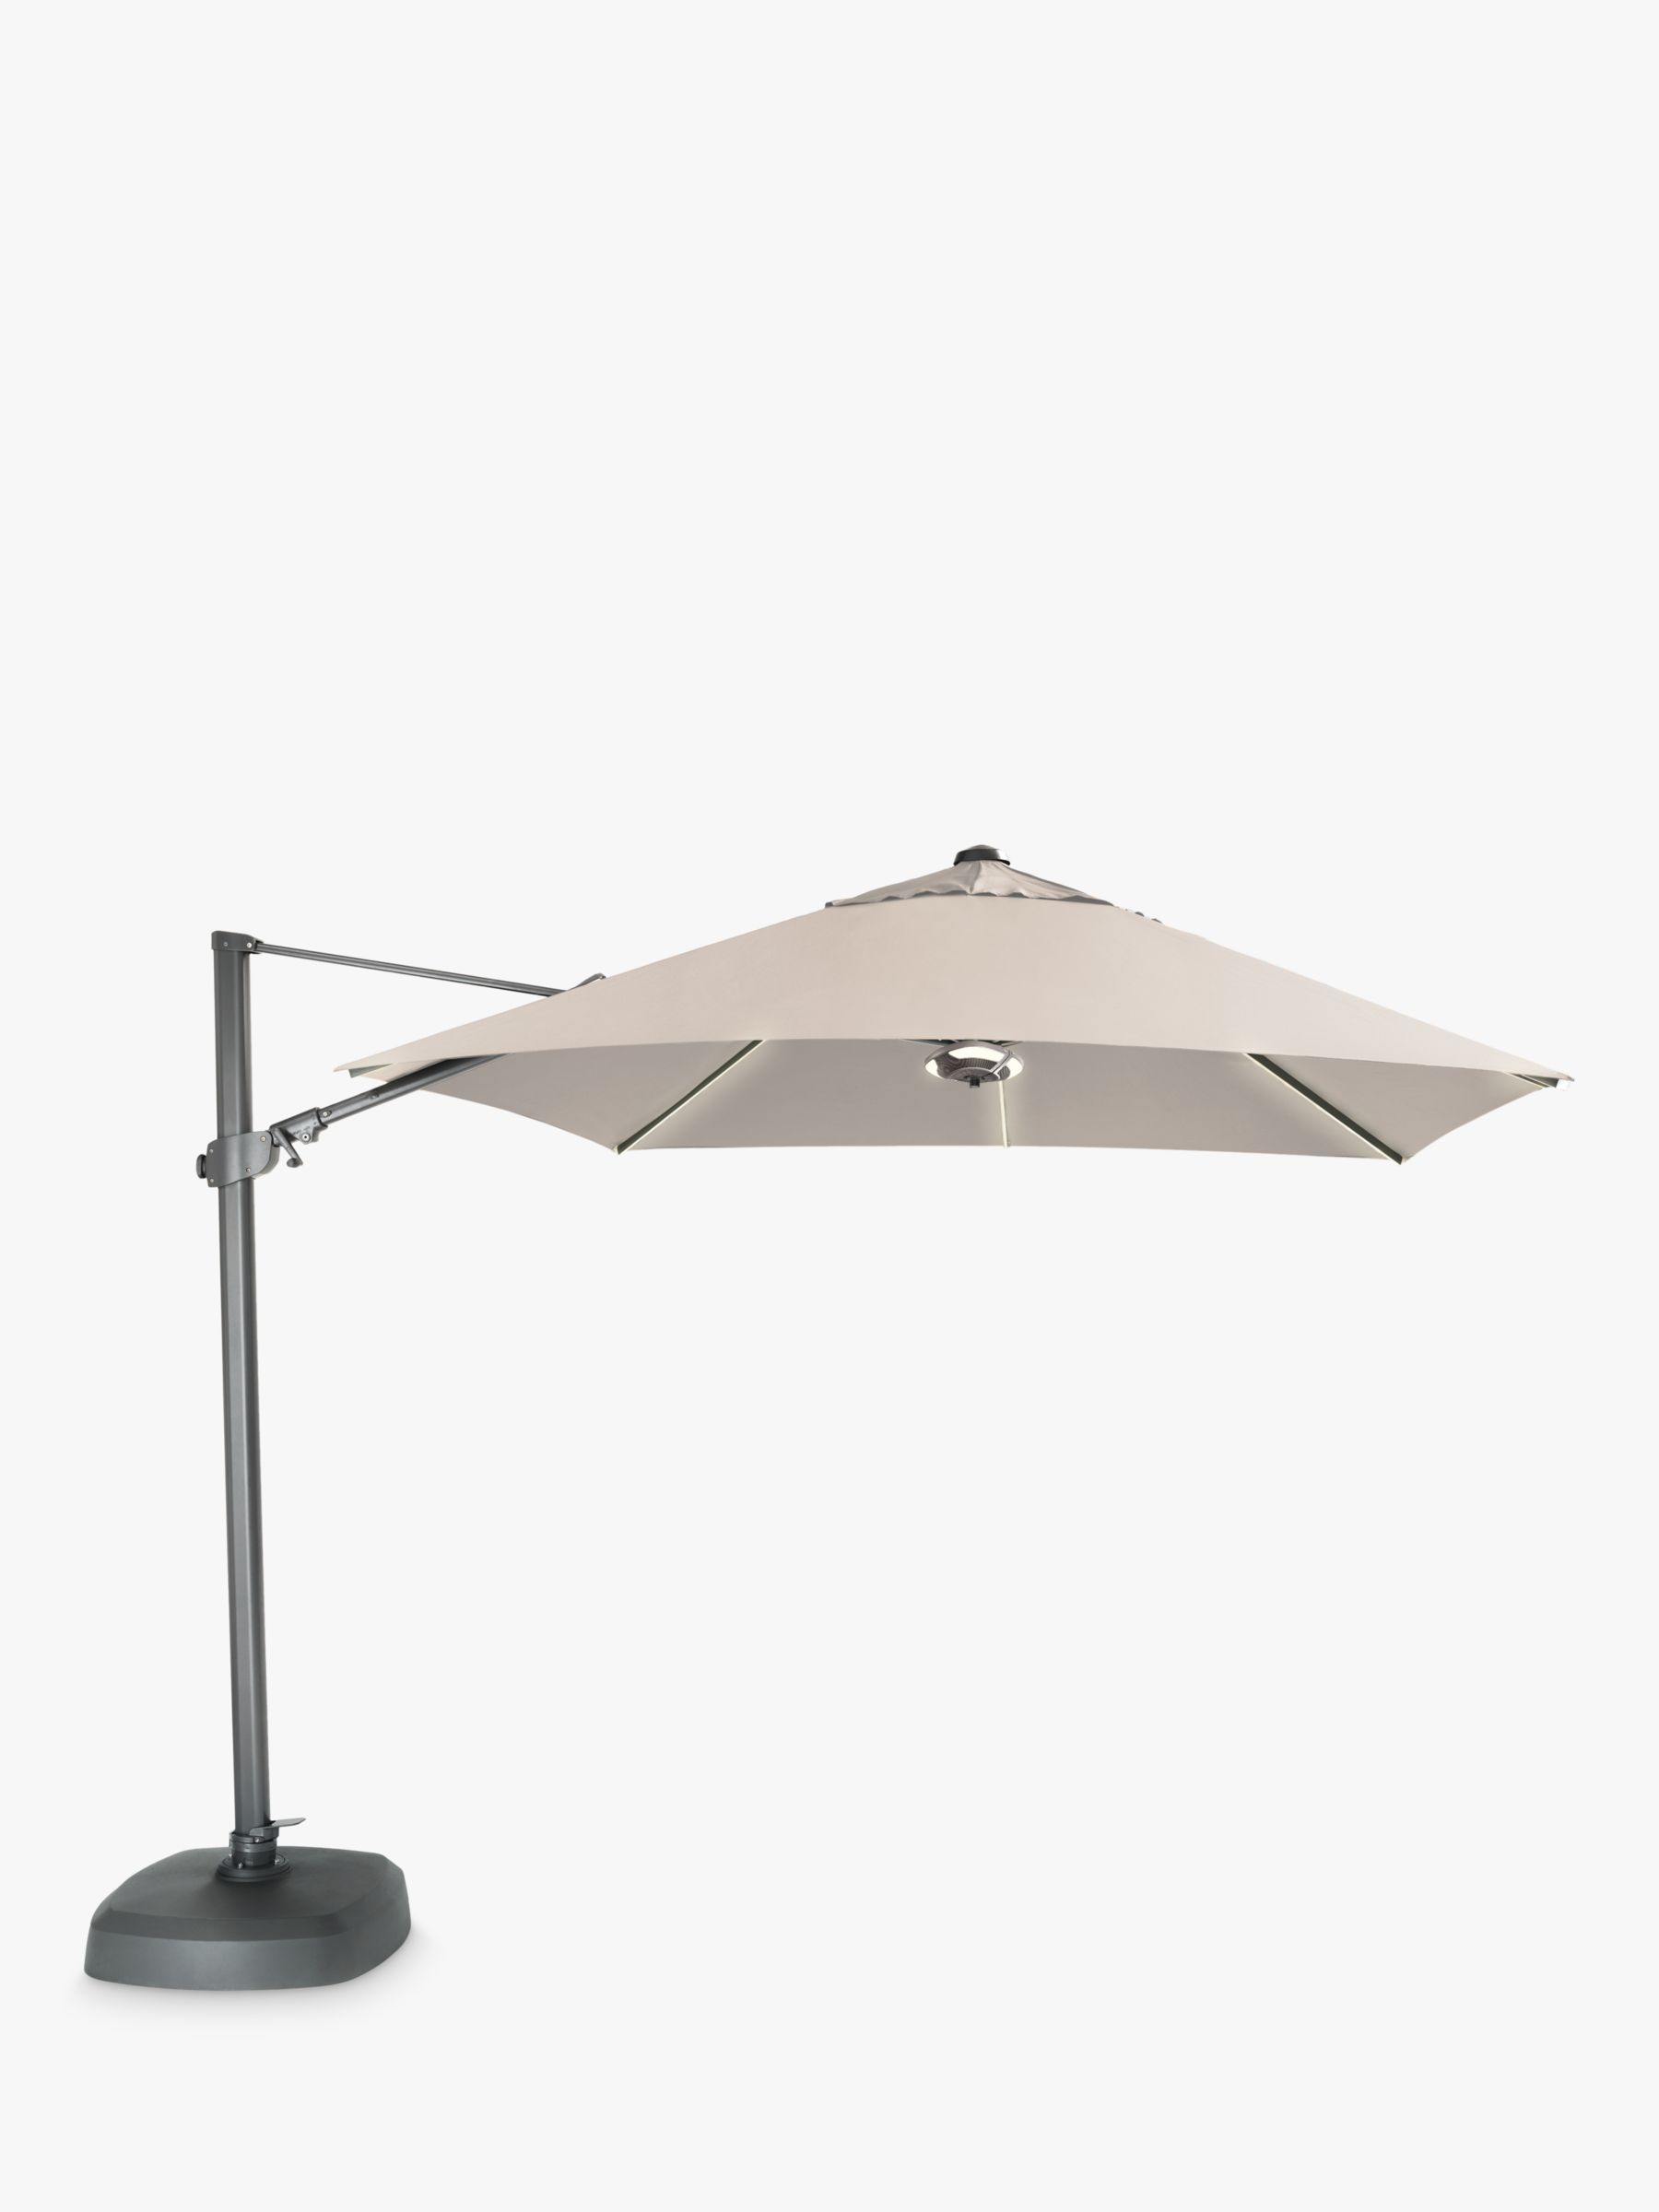 Photo of Kettler freestanding led light parasol & base with wireless speakers 3m